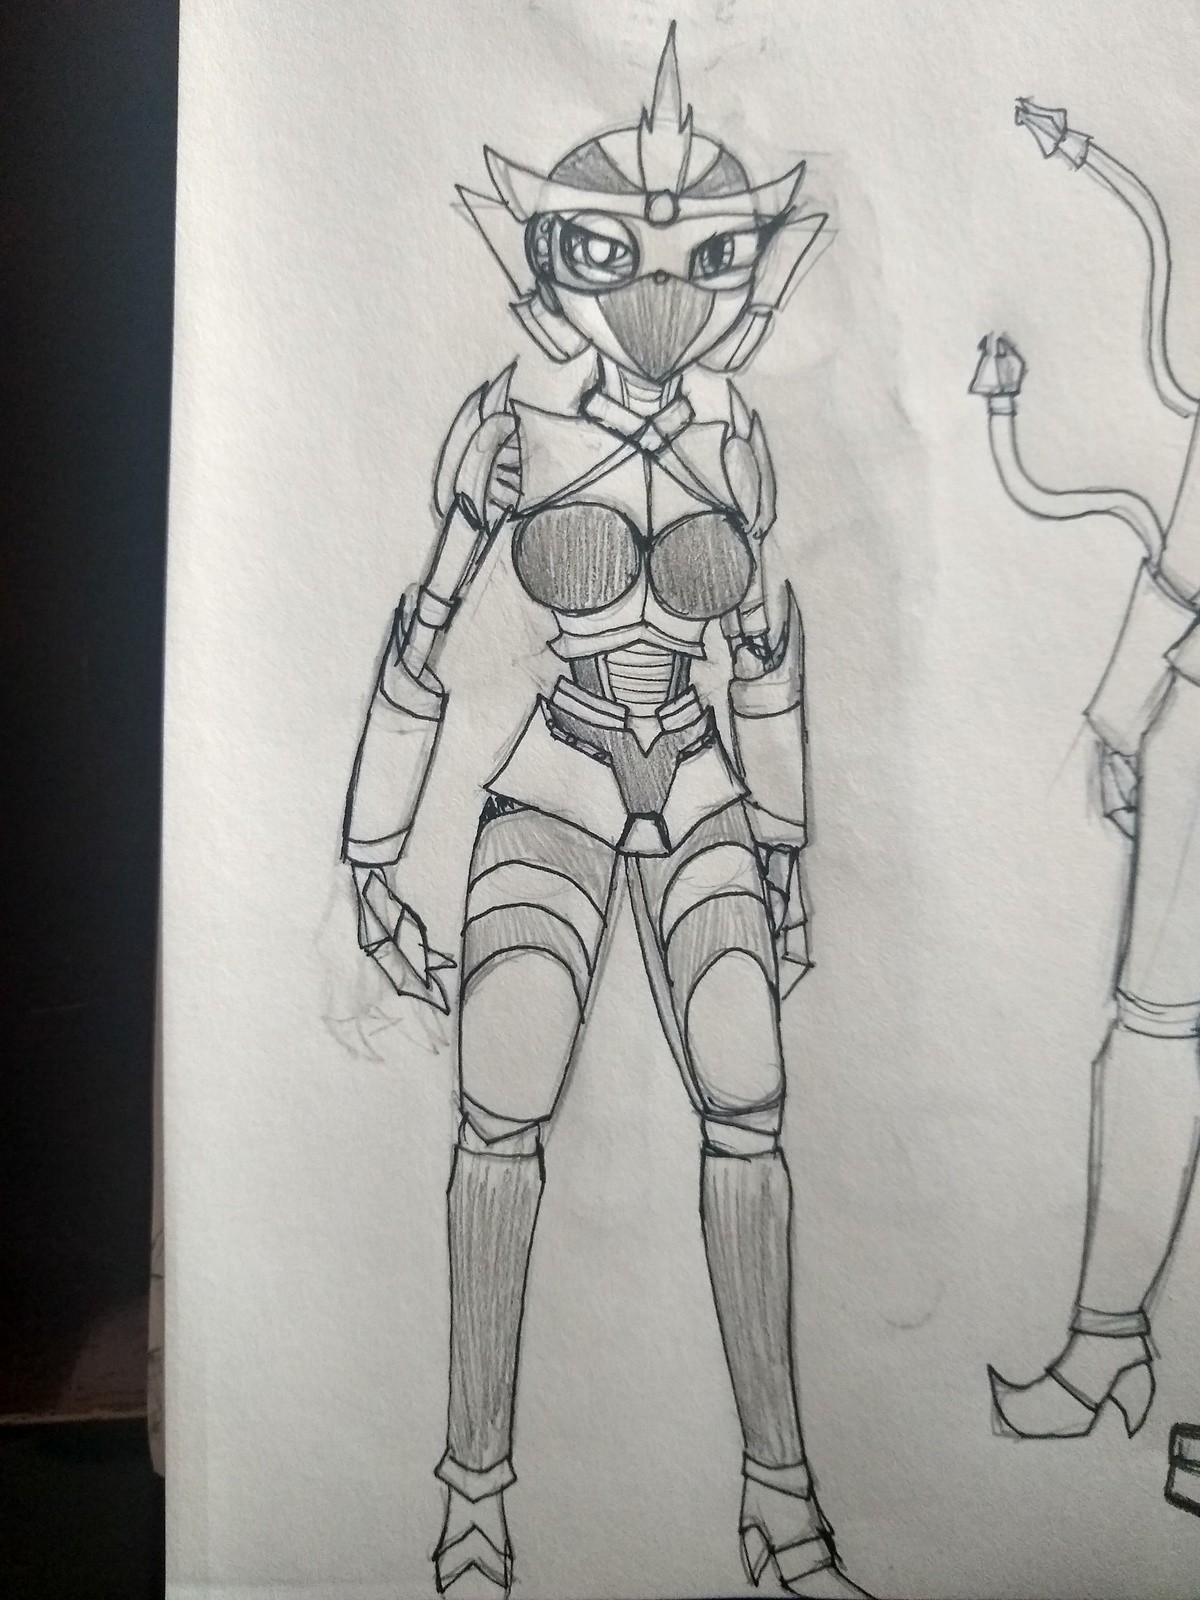 OC Art, Cyborgz sketches. A light assassin cyborg. She chose to forgo any accessories this time around. No arm shot gun or 5.7 mg. A nanomachine carrier cyborg.